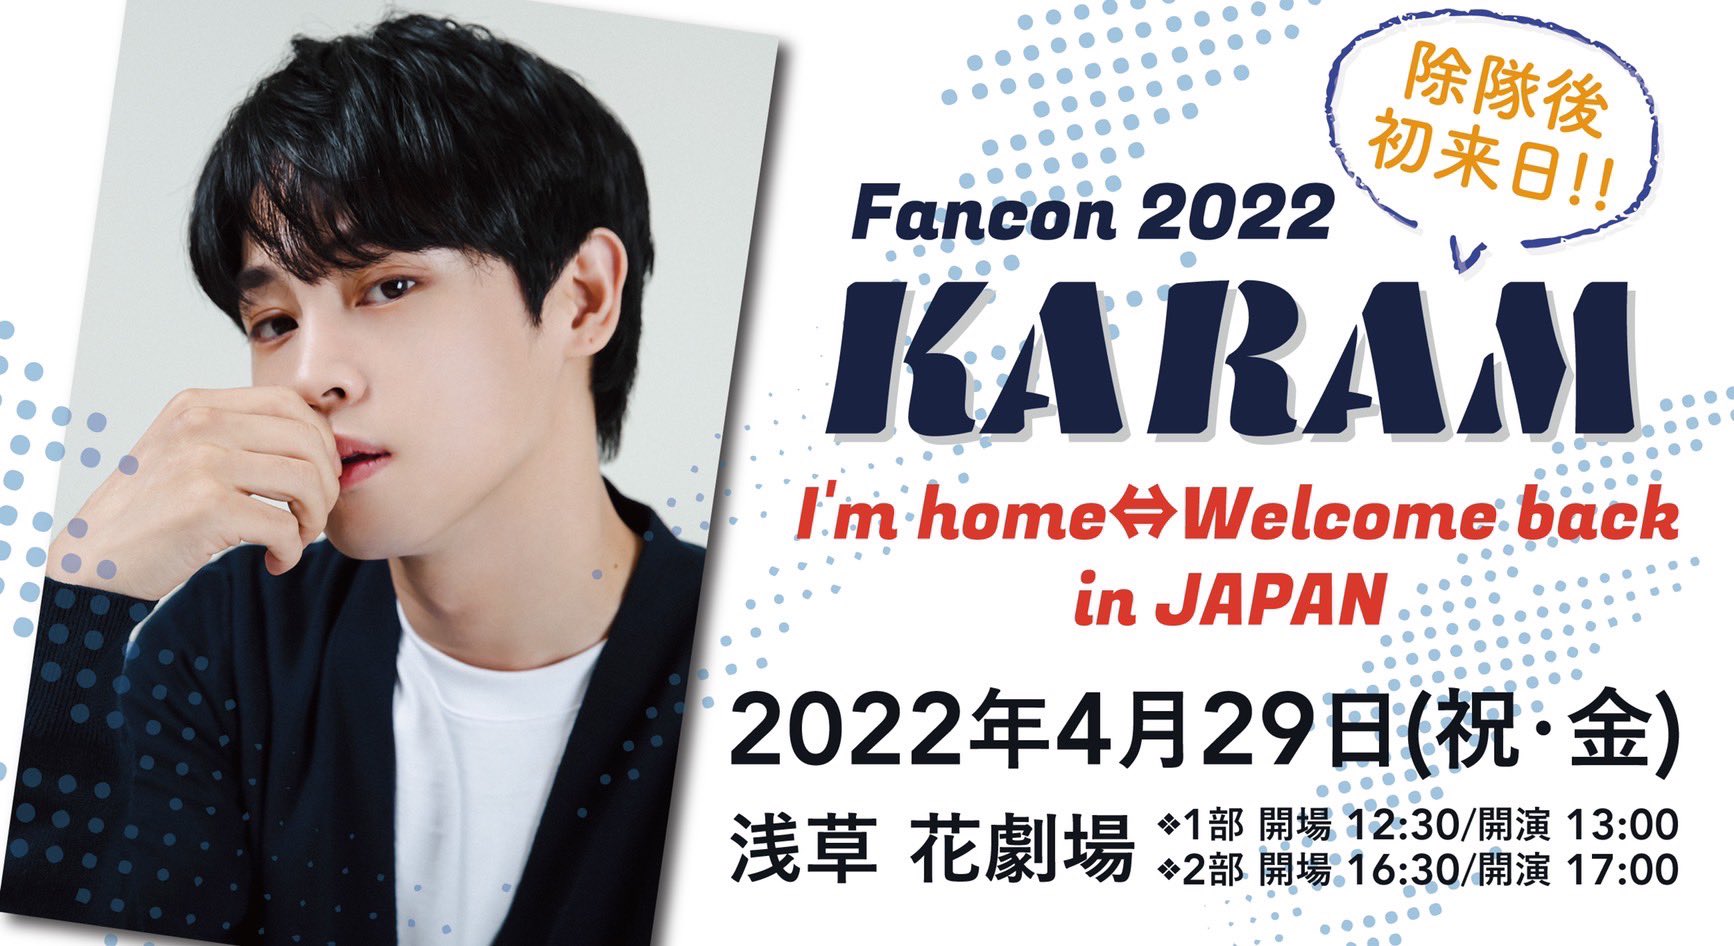 KARAM Fancon 2022  I'm home⇔Welcome back in Japan